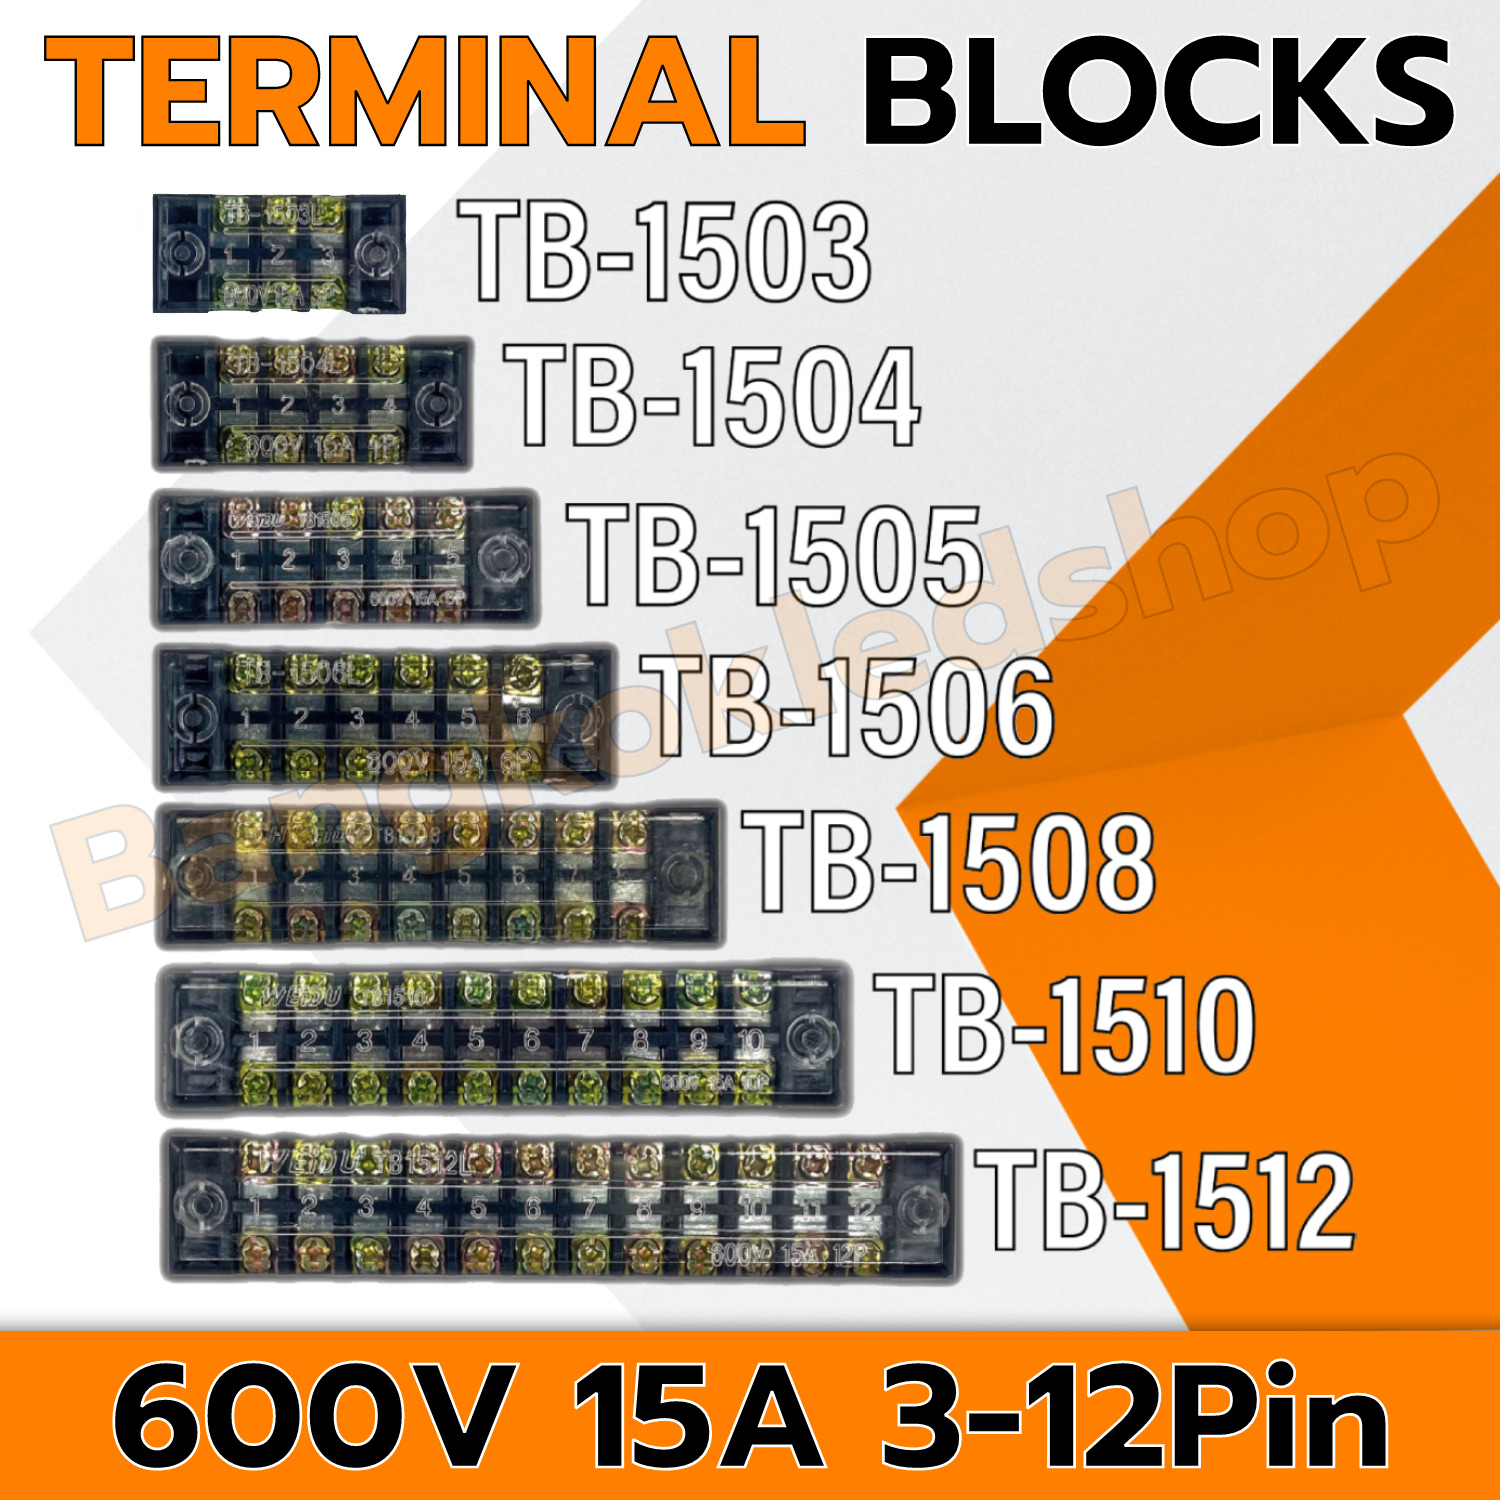 terminal-blocks-เทอร์มินอลบล็อก-ต่อสาย-15a-600v-รุ่น-tb-1503-tb-1512-ขนาด-3p-4p-5p-6p-8p-10p-12p